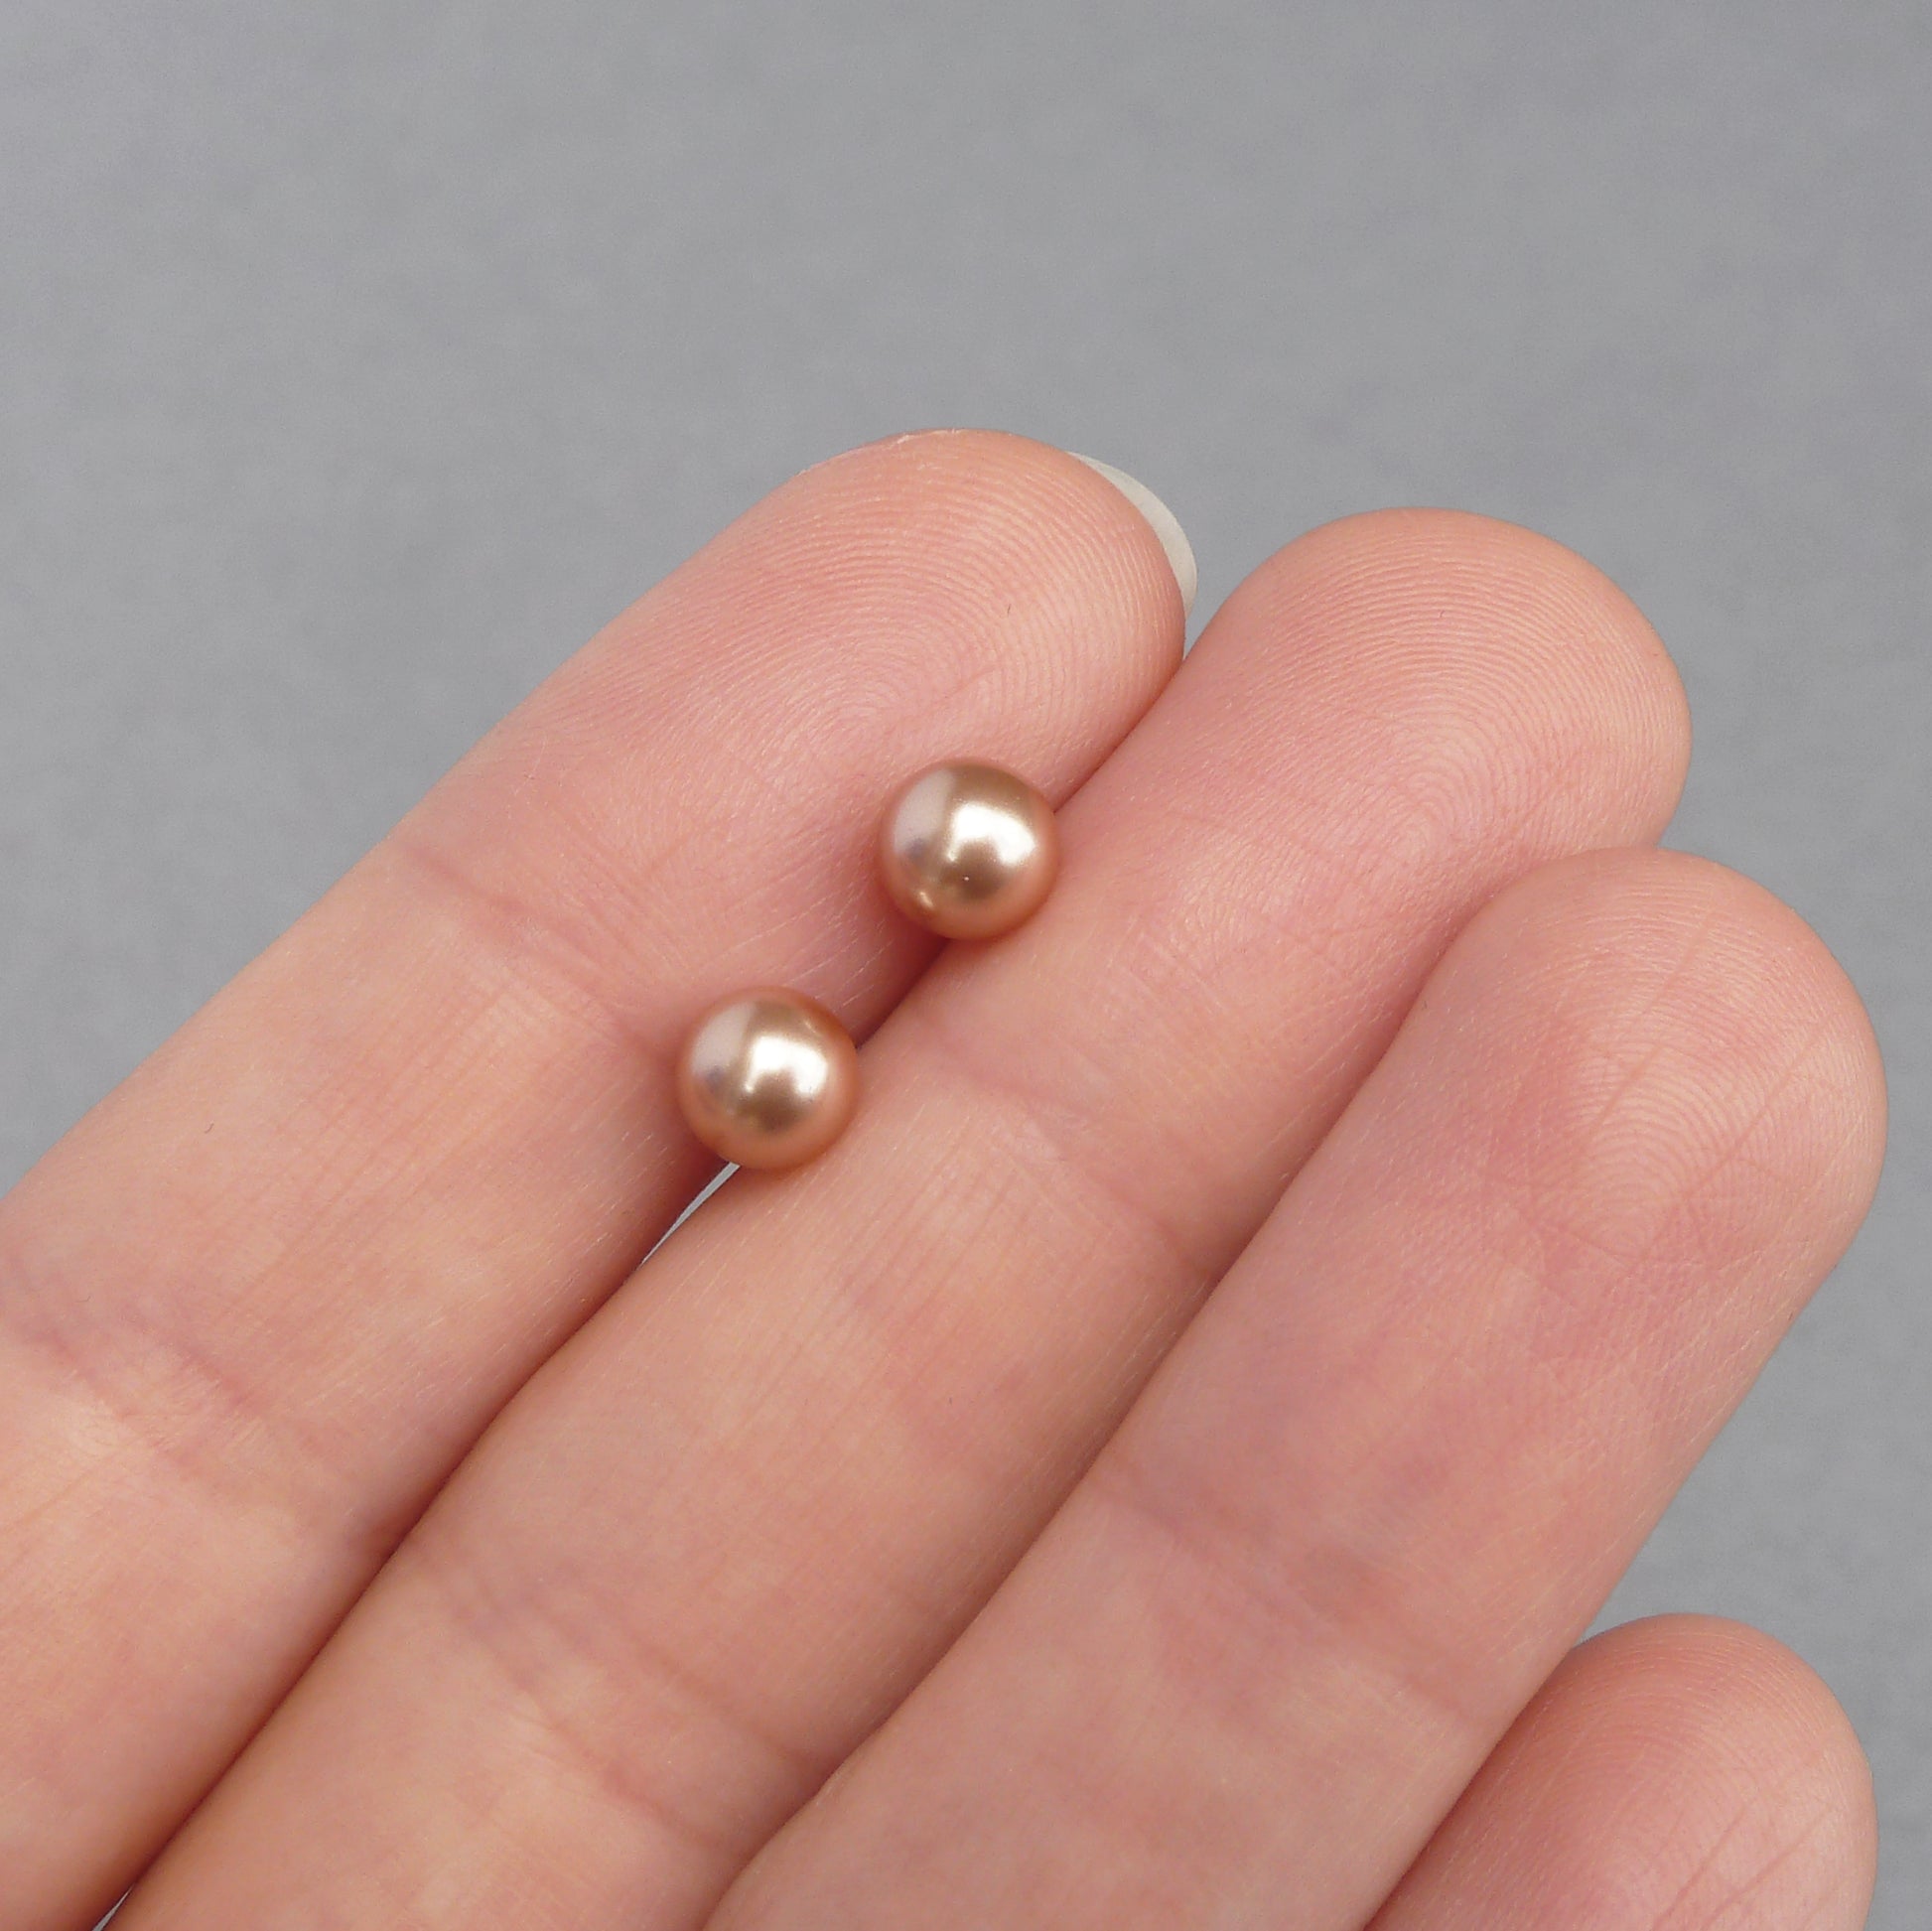 6mm light brown pearl studs